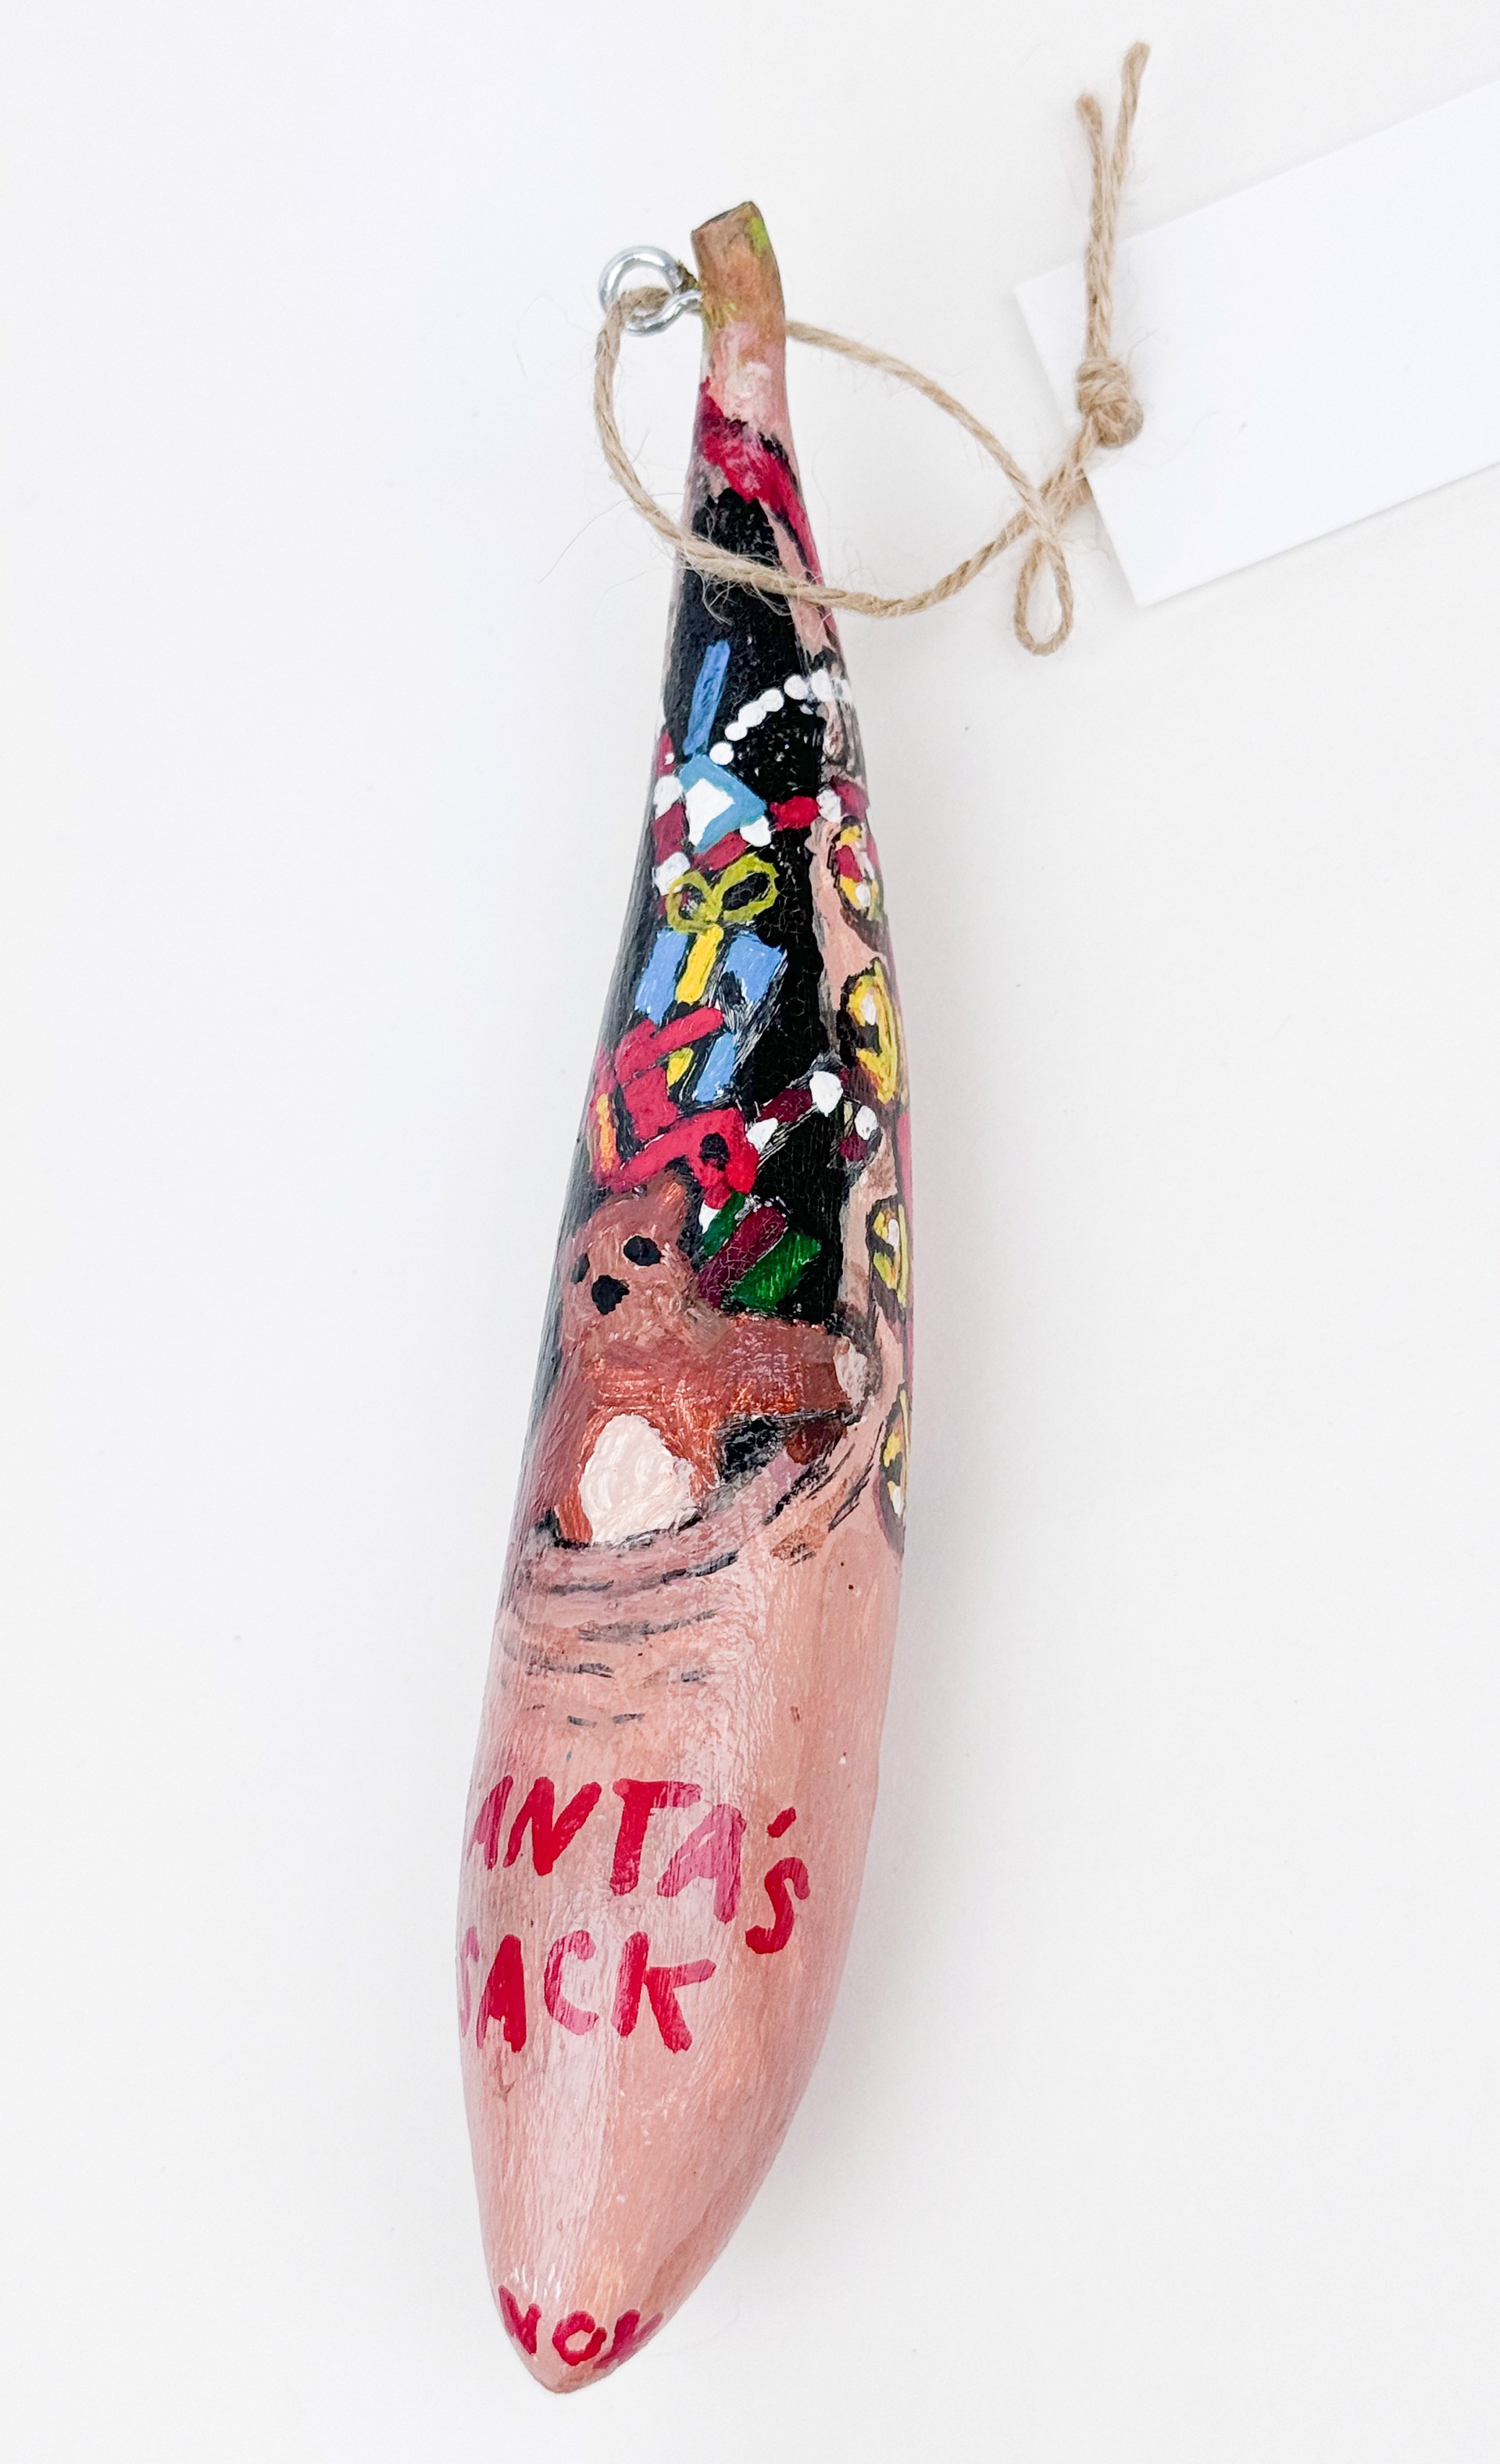 Santa's Sack (ornament) by Mike Knox